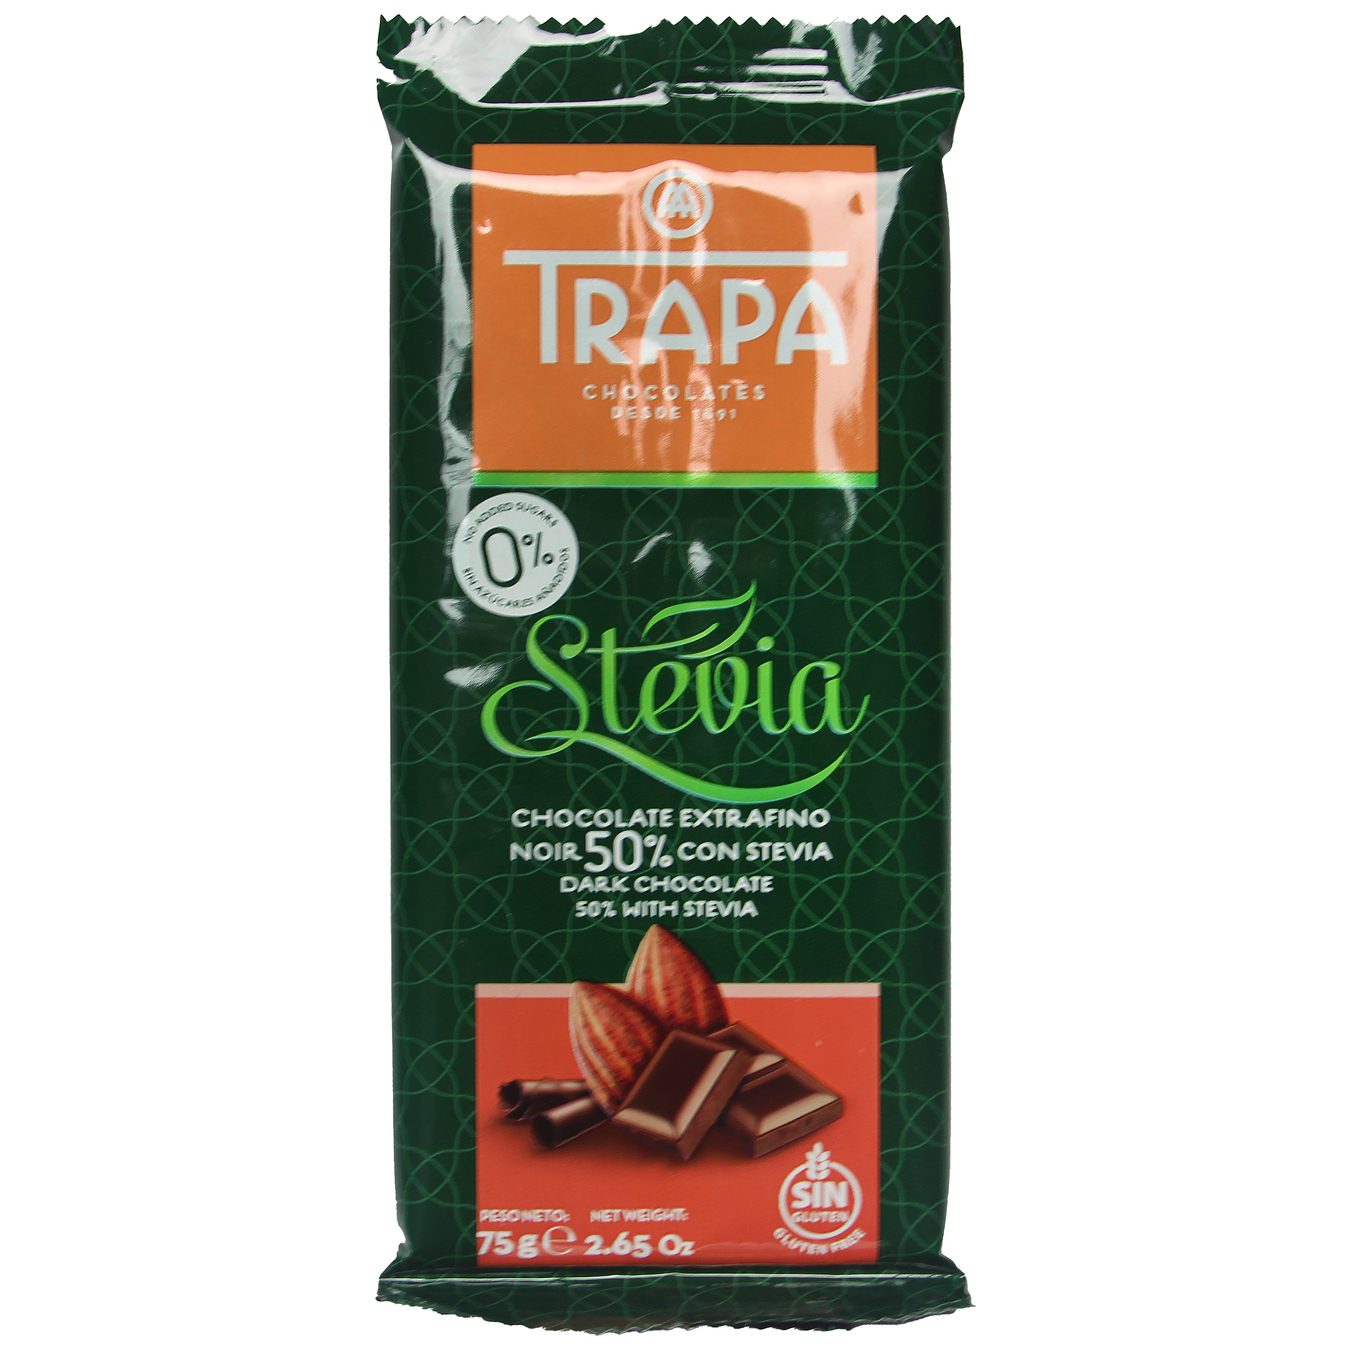 Black Chocolate Trapa Stevia Sugar-Free 75g